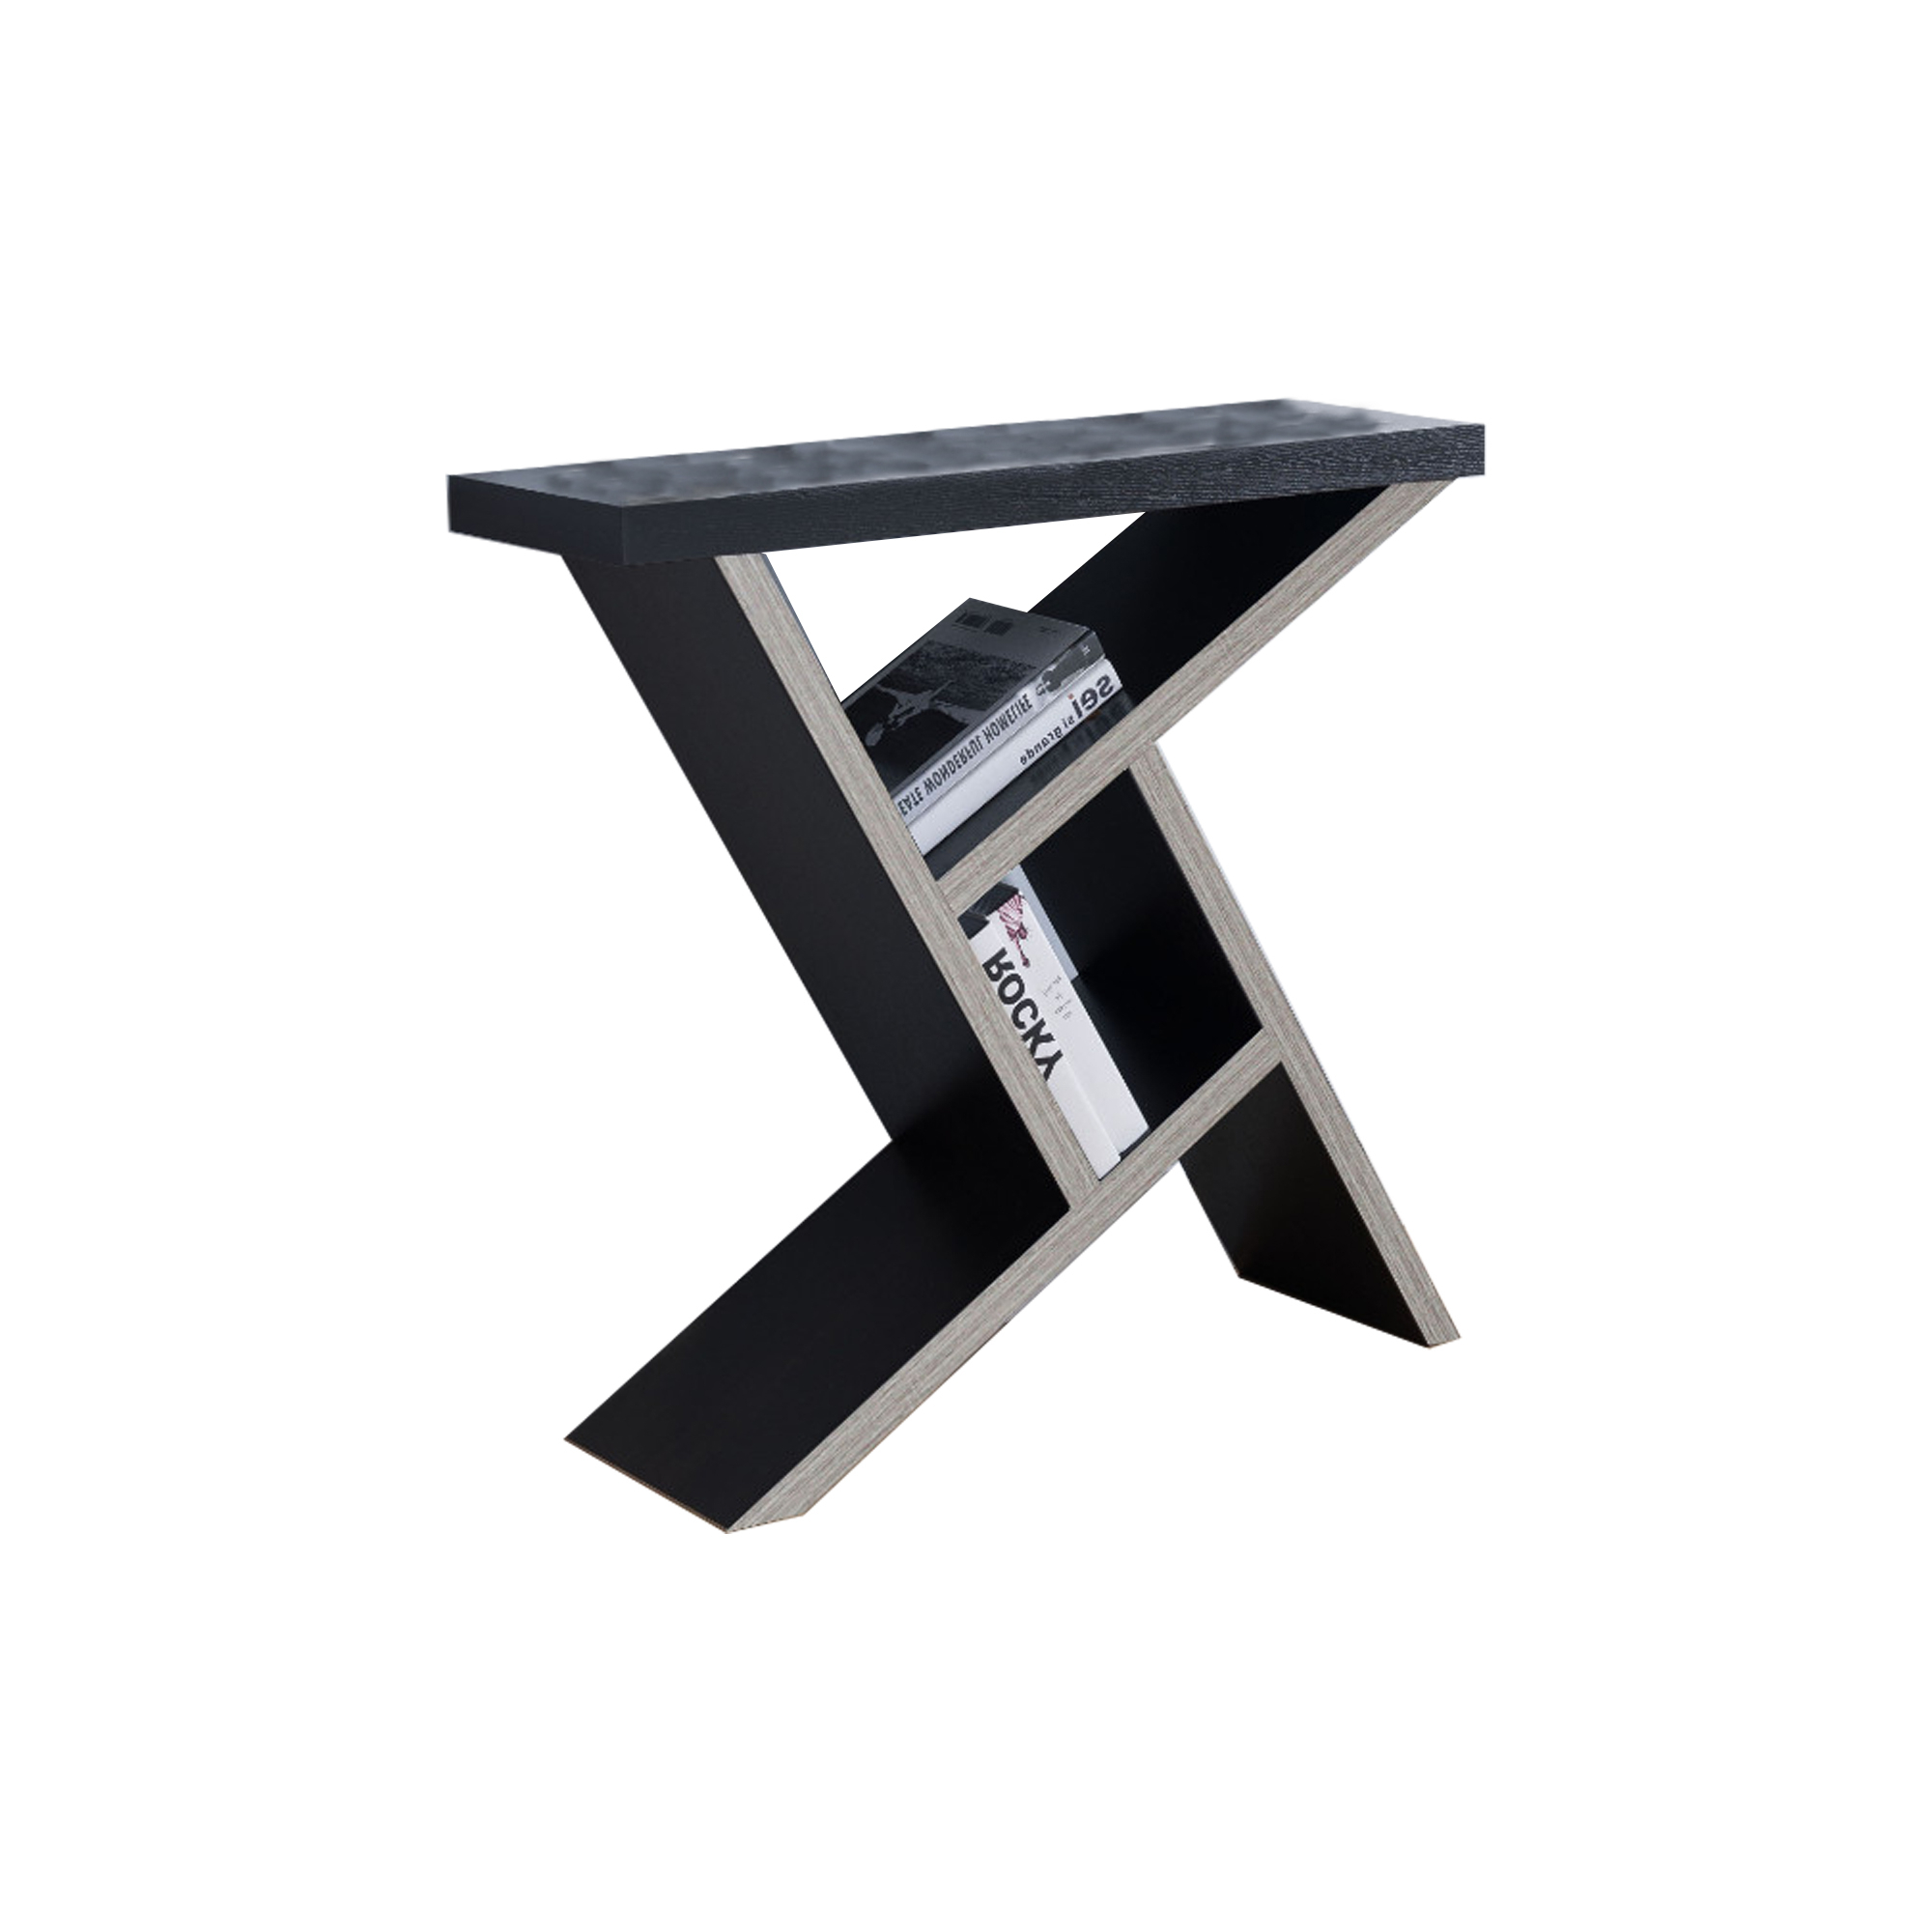 Unique Designed Console Table With Shelf, Dark Brown And Light Brown- Saltoro Sherpi